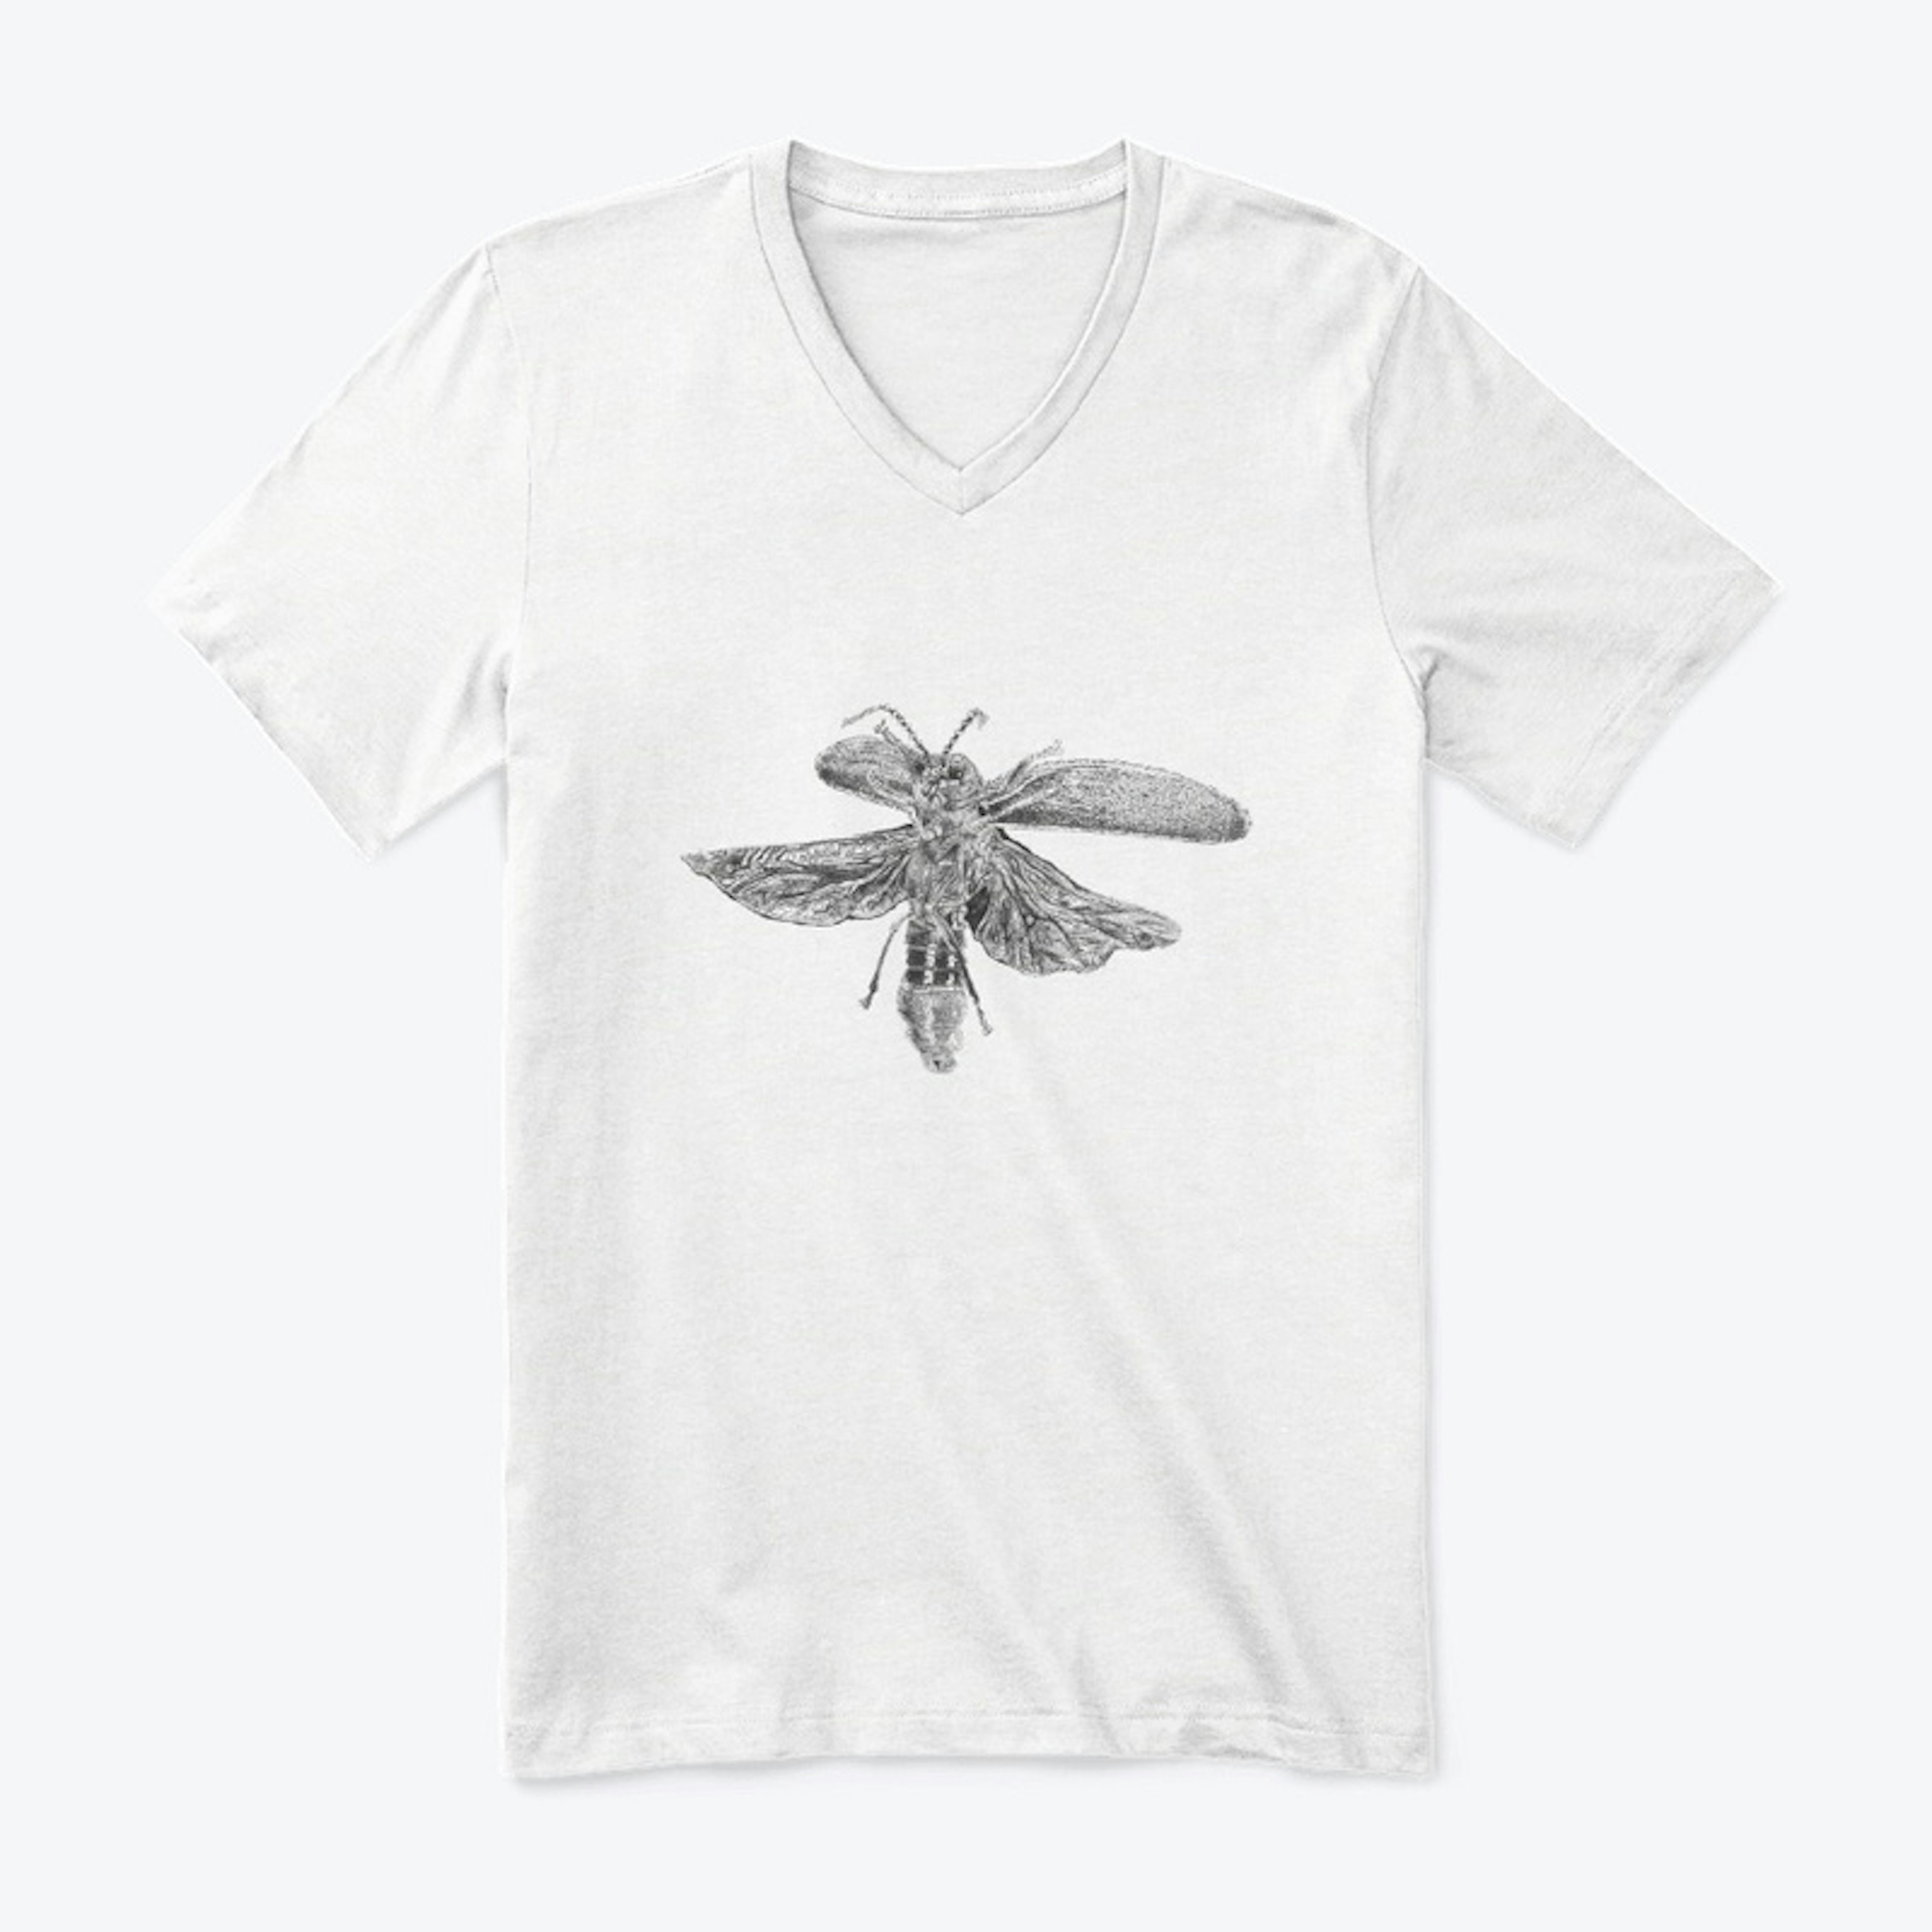 Firefly unisex t-shirt